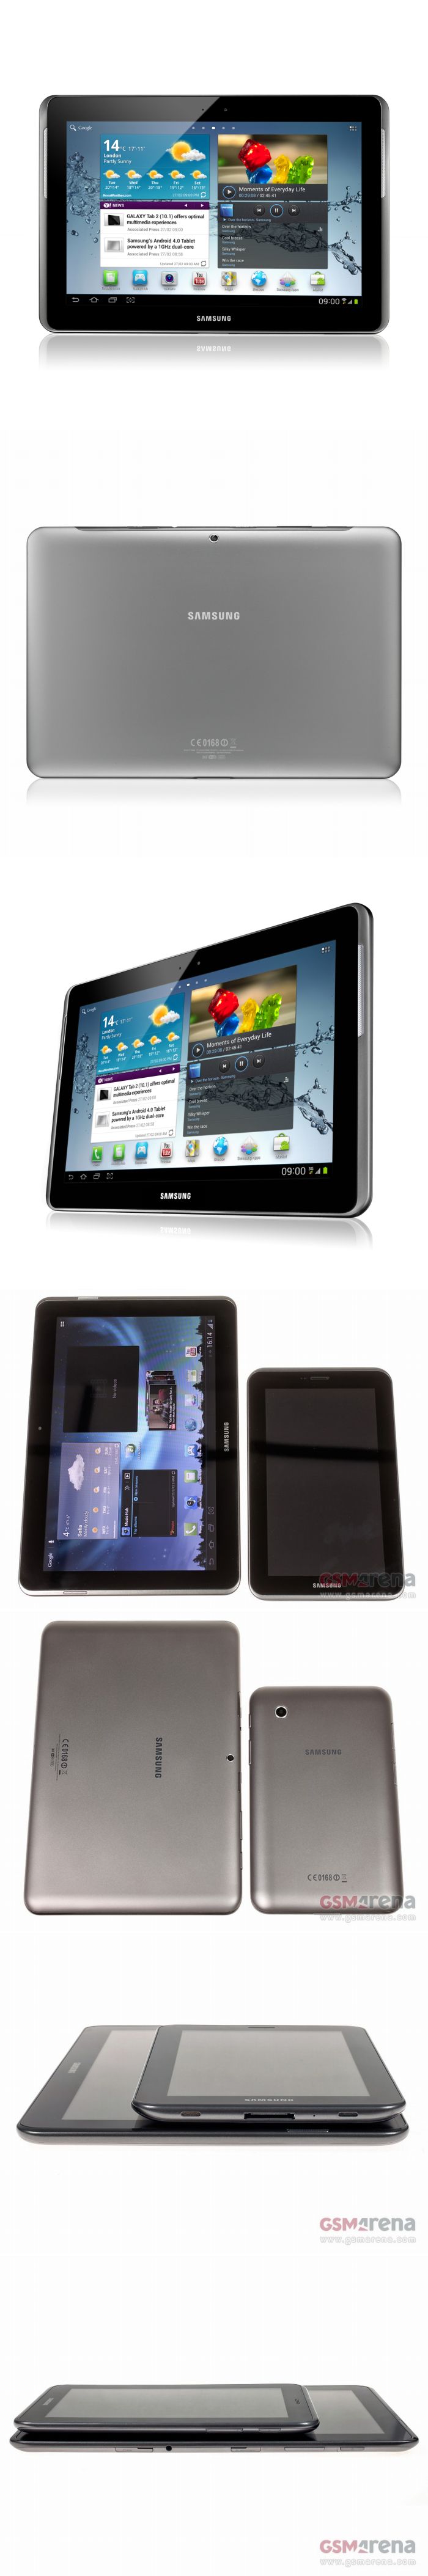 Samsung Galaxy Tab 2: 10.1 col, Android ICS